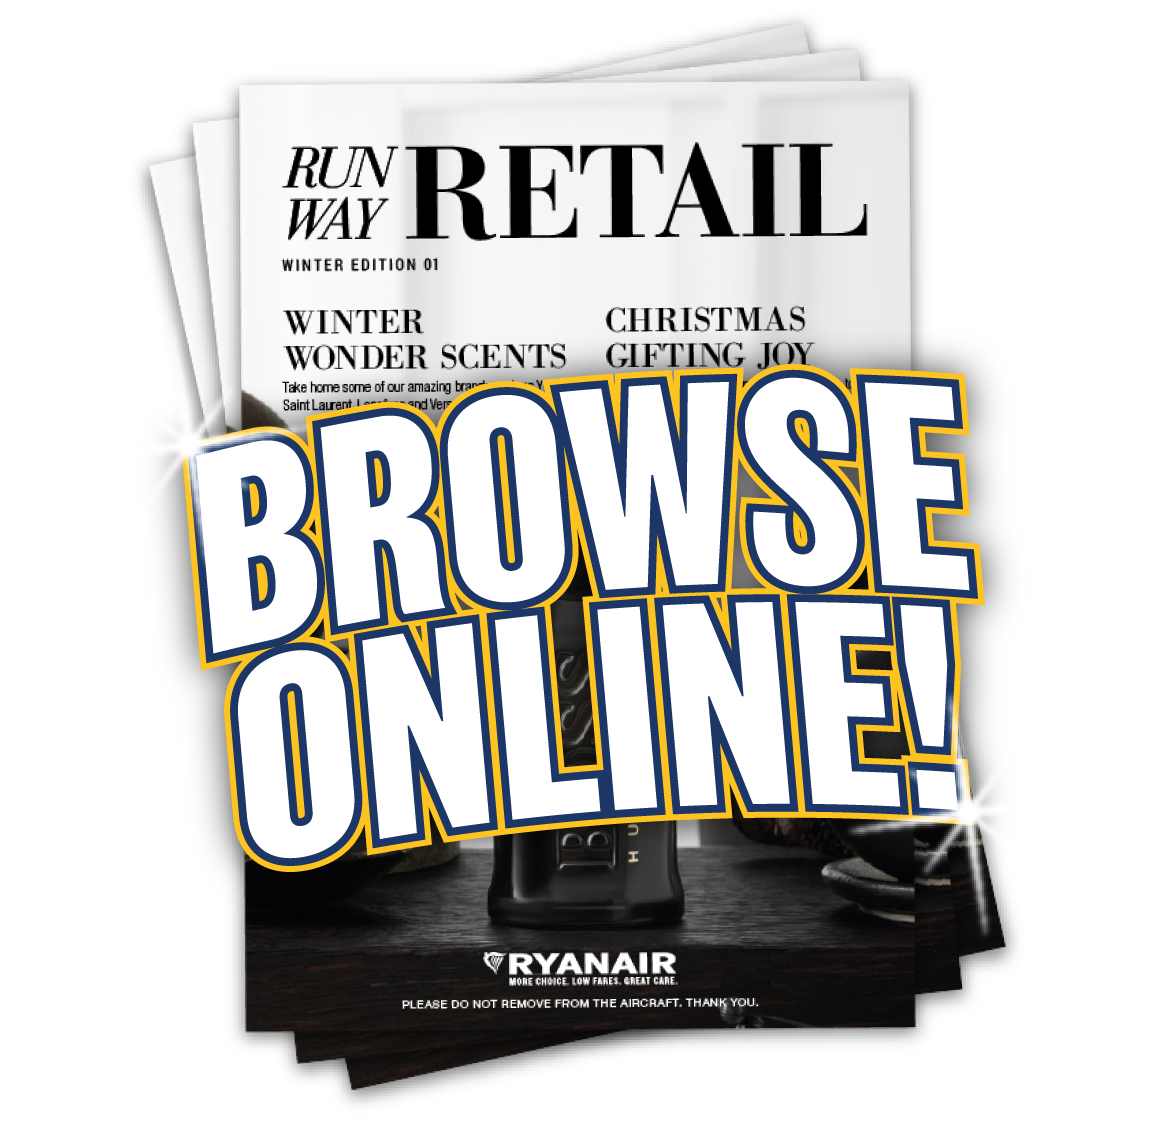 Browse Runway Retail Online!